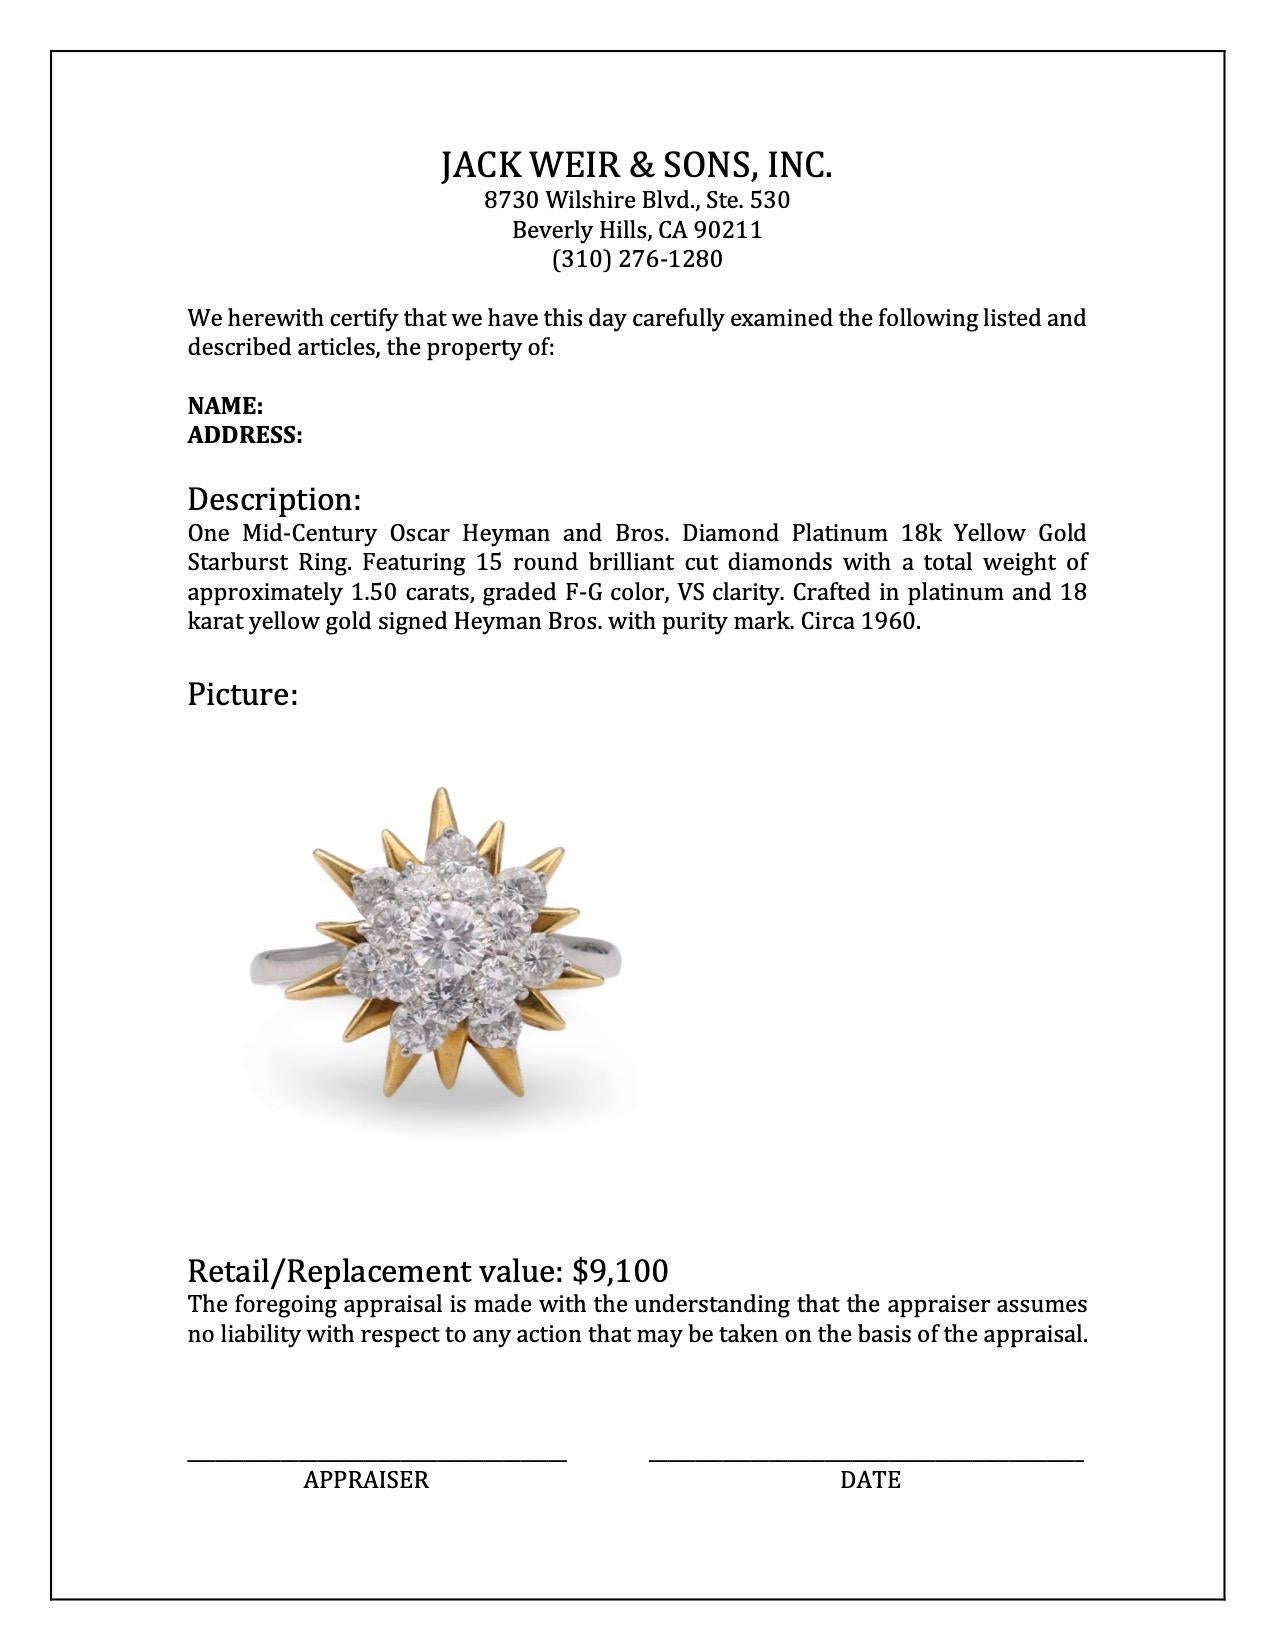 Mid-Century Oscar Heyman and Bros. Diamond Plat. 18k Yellow Gold Starburst Ring For Sale 1